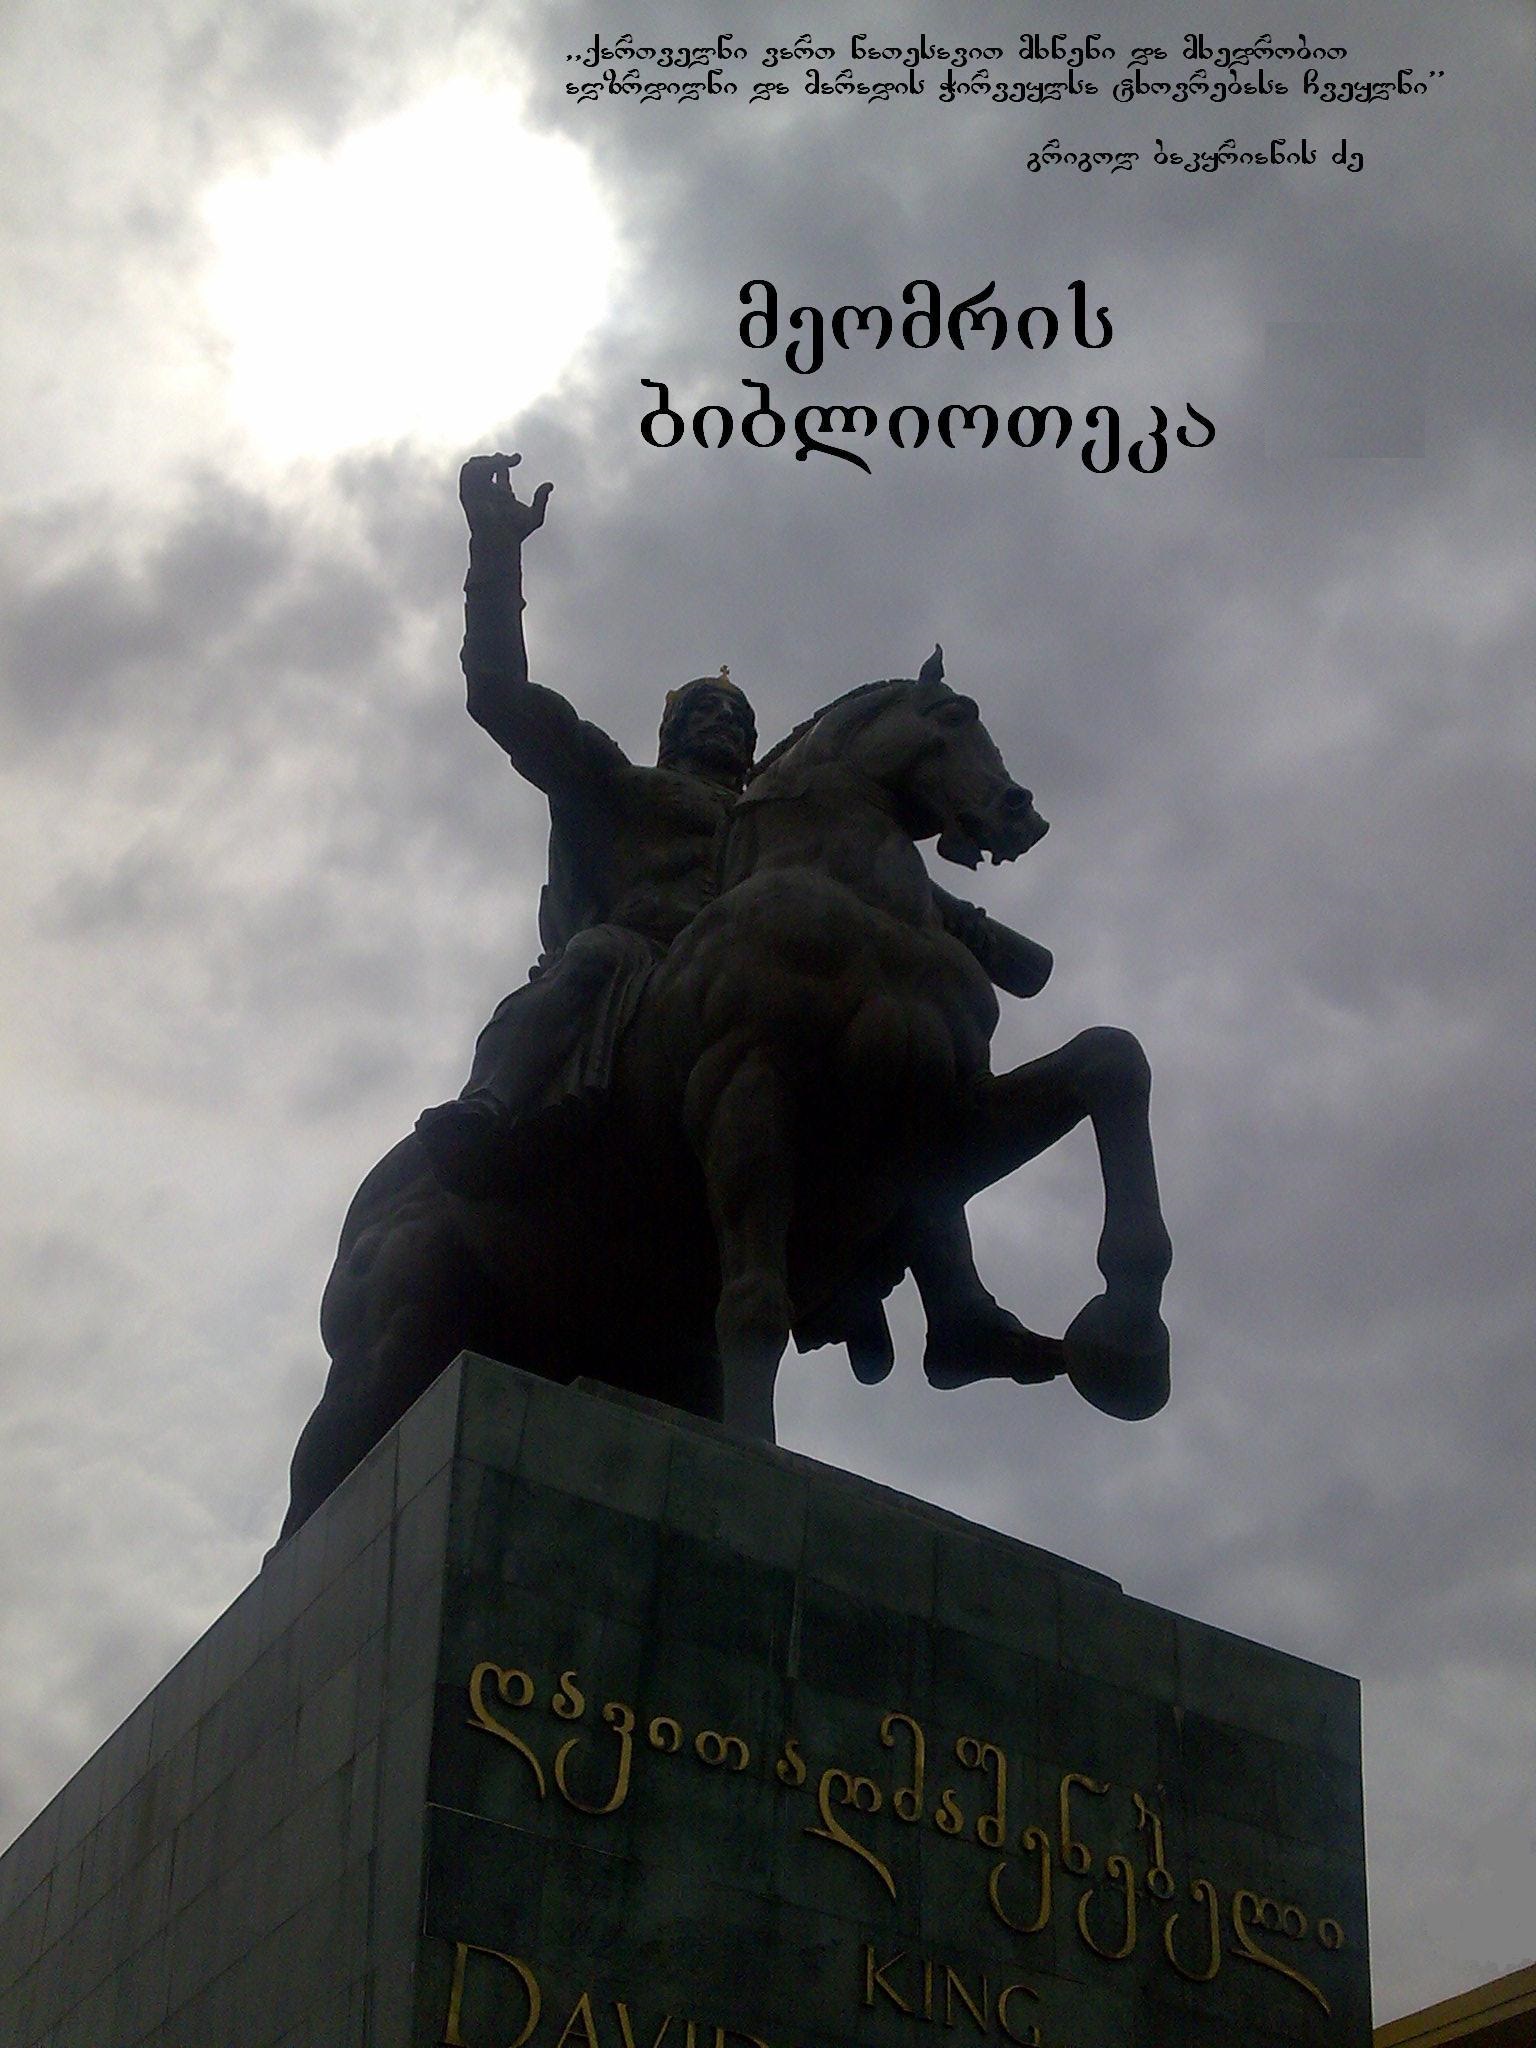 Kakutsa Cholokashvili is the National Hero of Georgia